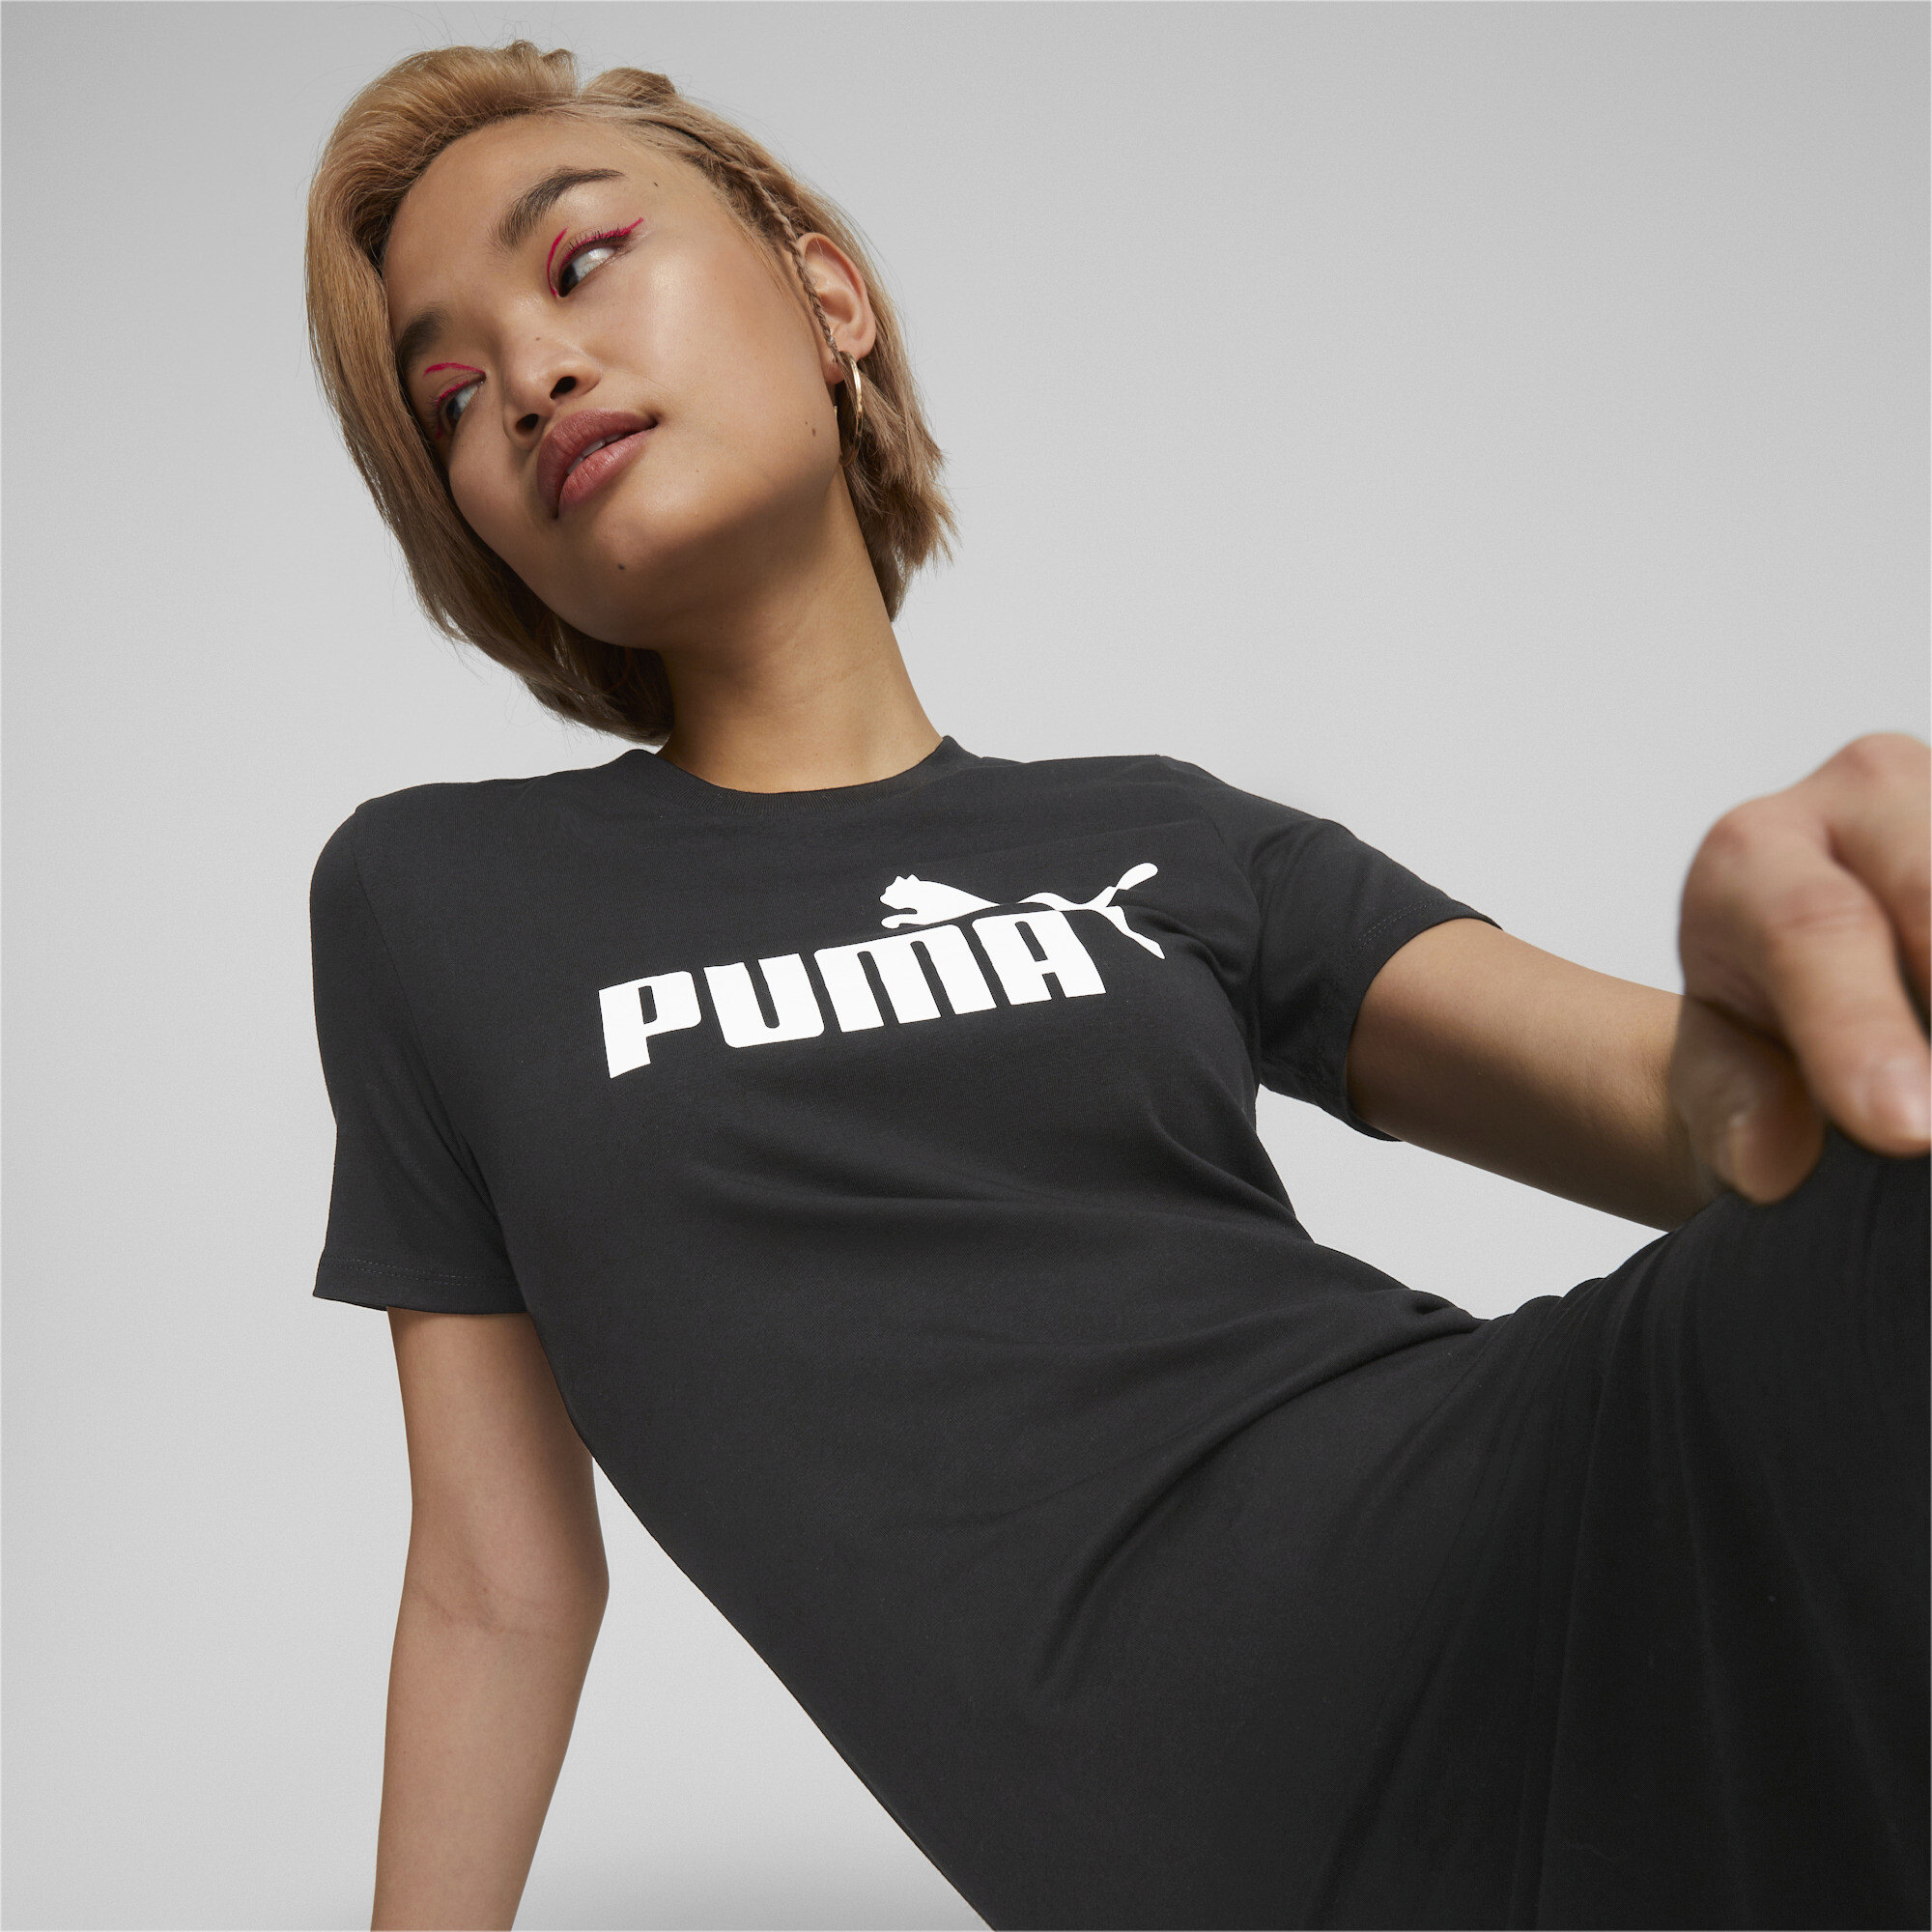 Women's Puma Essentials's Slim Tee Dress, Black, Size XS, Clothing